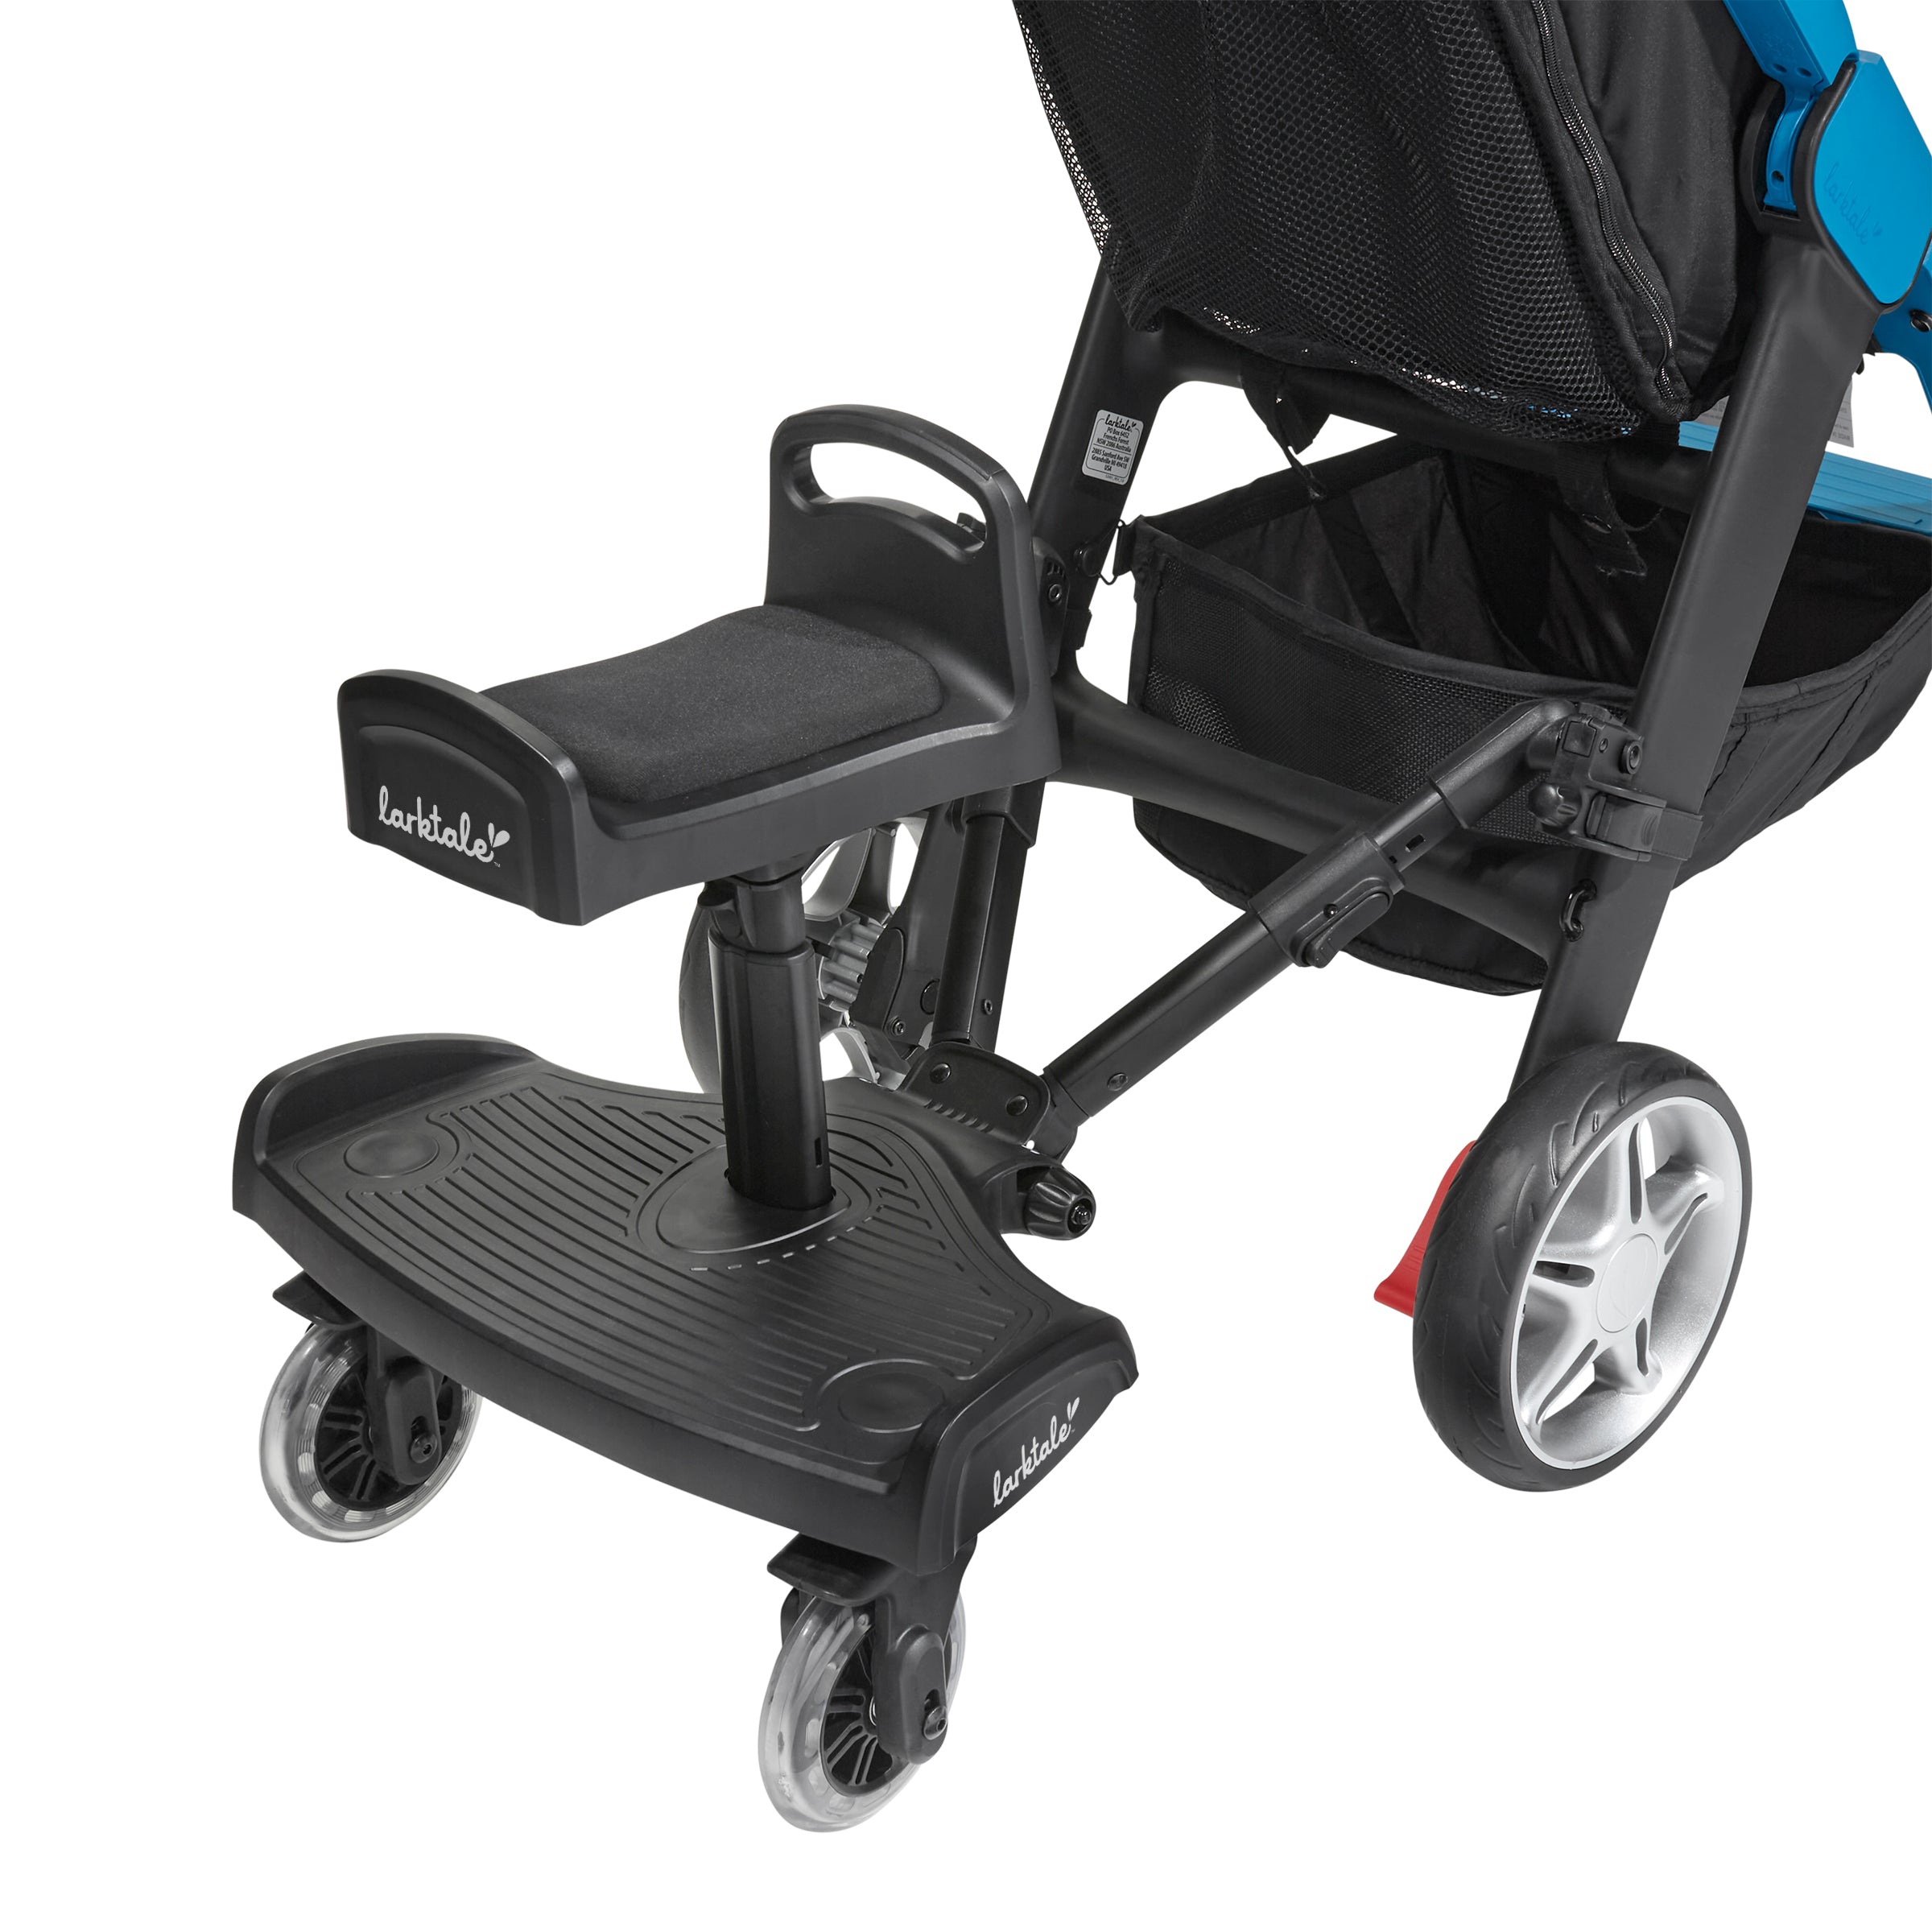 larktale stroller board attached to a stroller in saddle seat mode